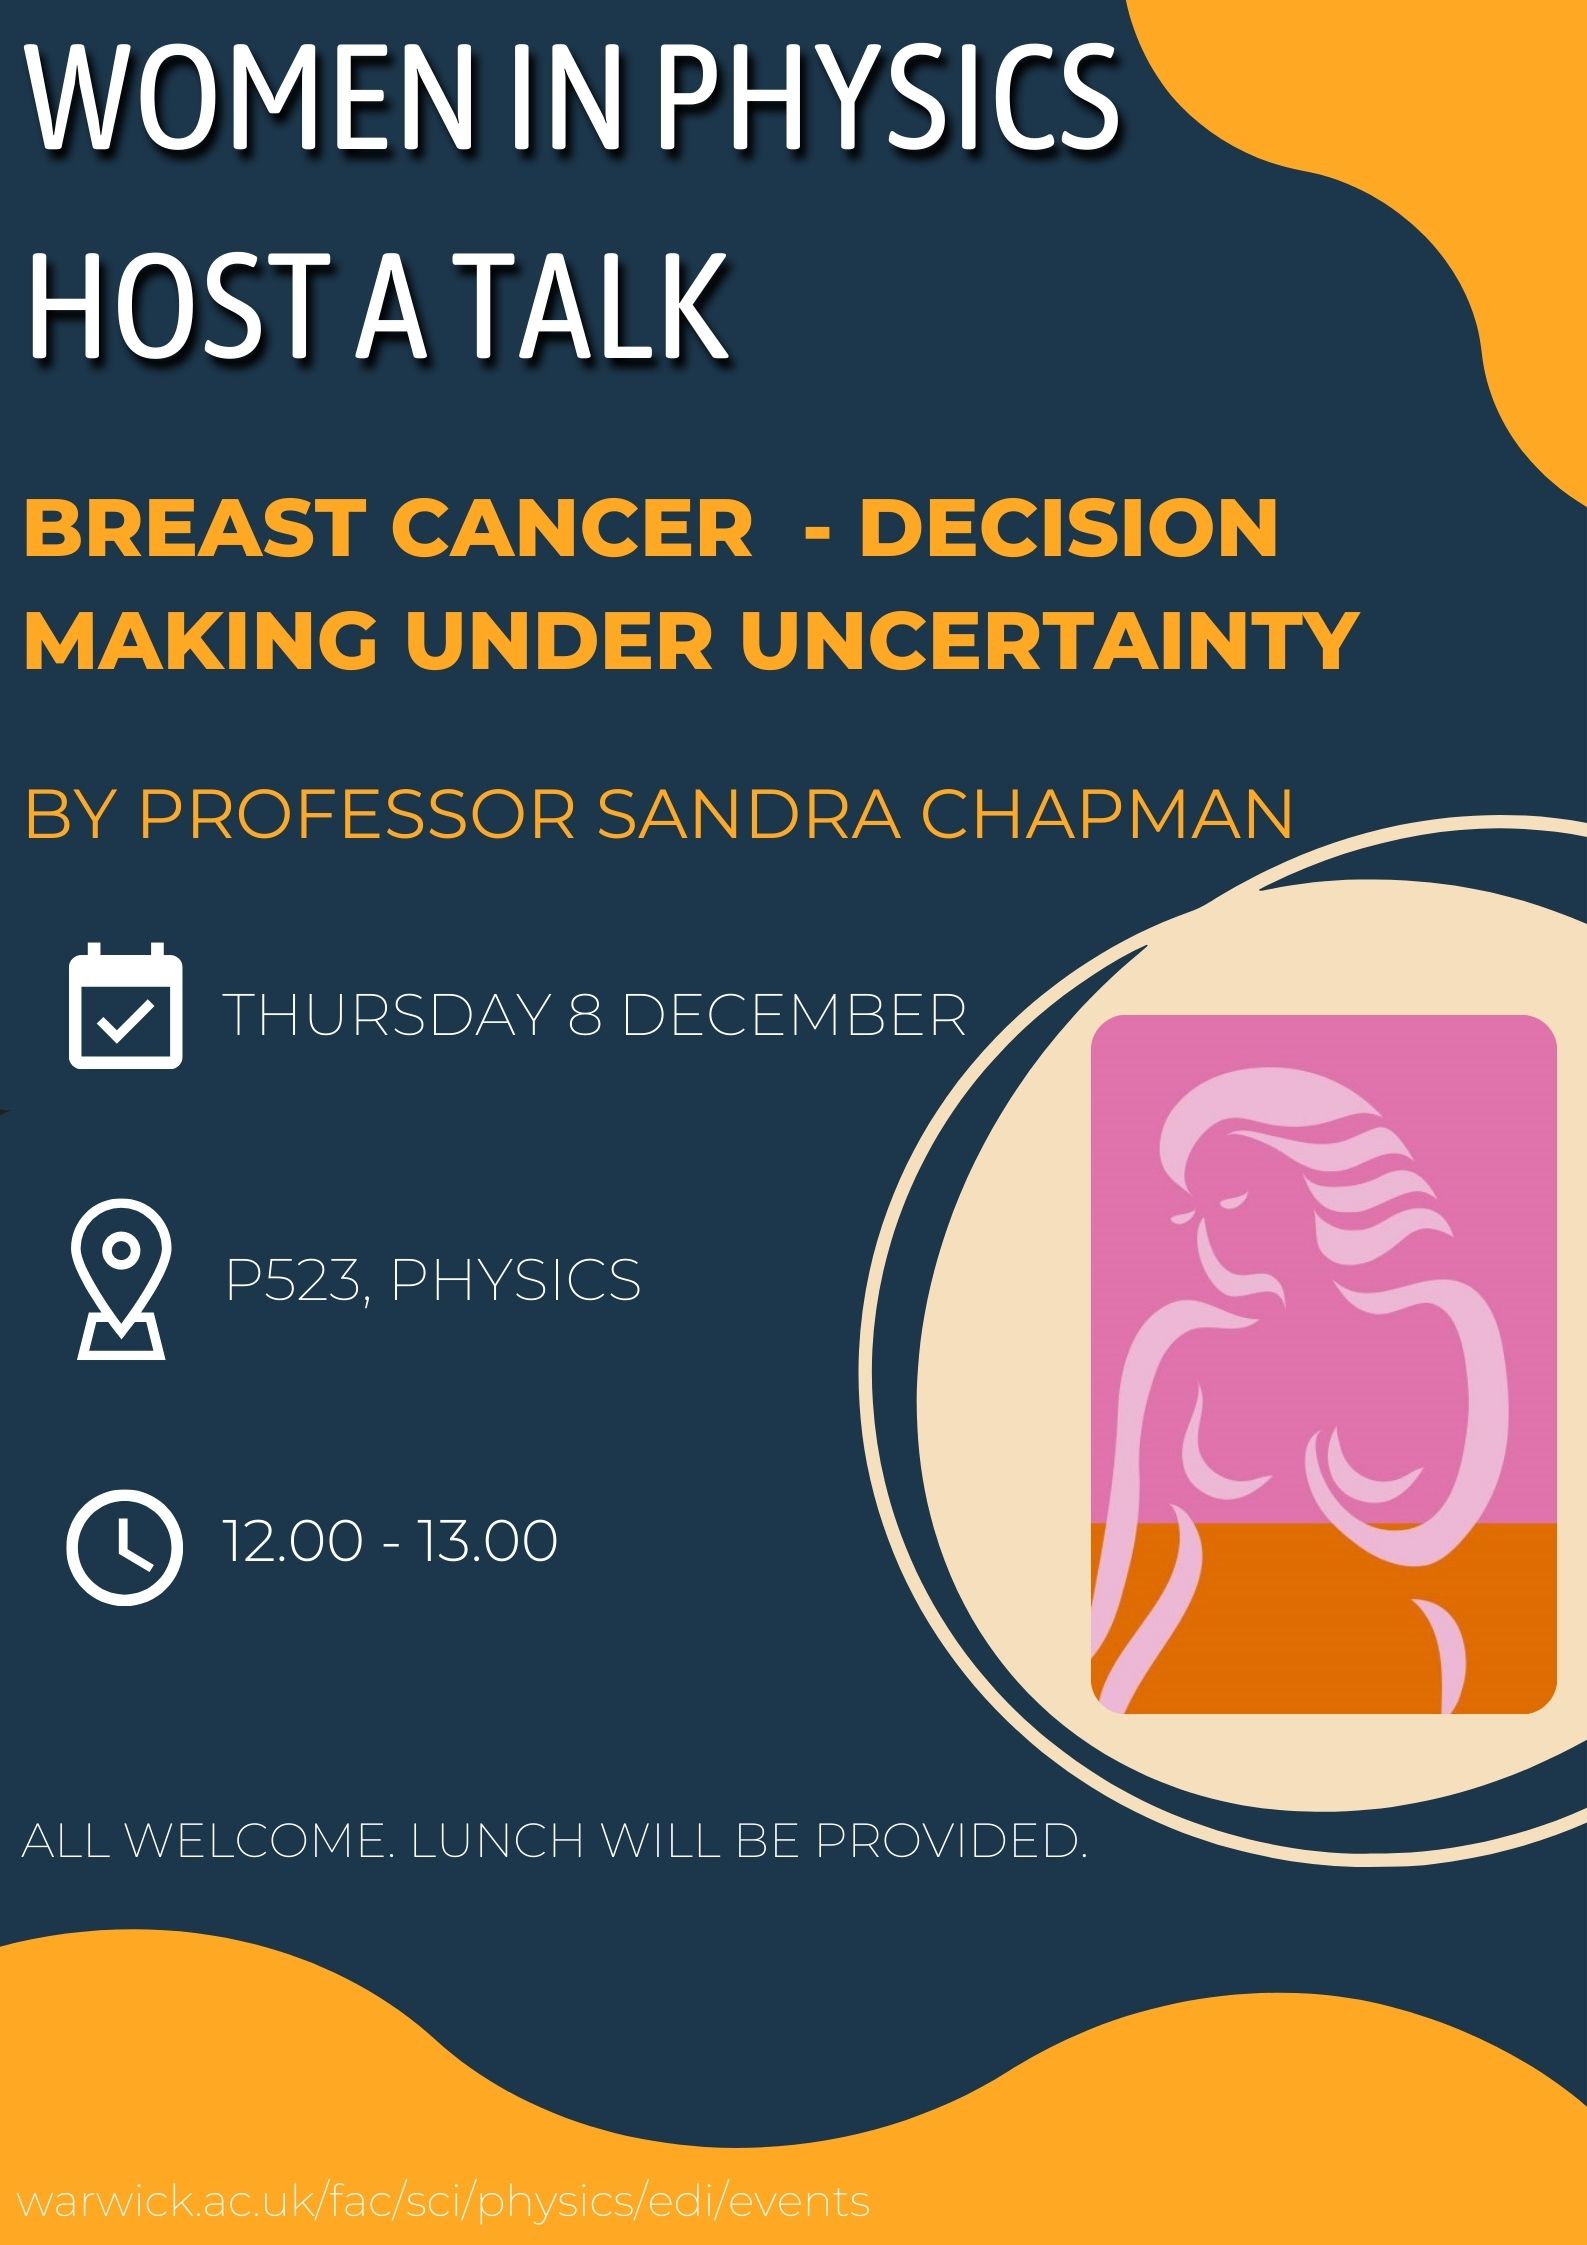 Poster for Professor Sandra Chapman talk